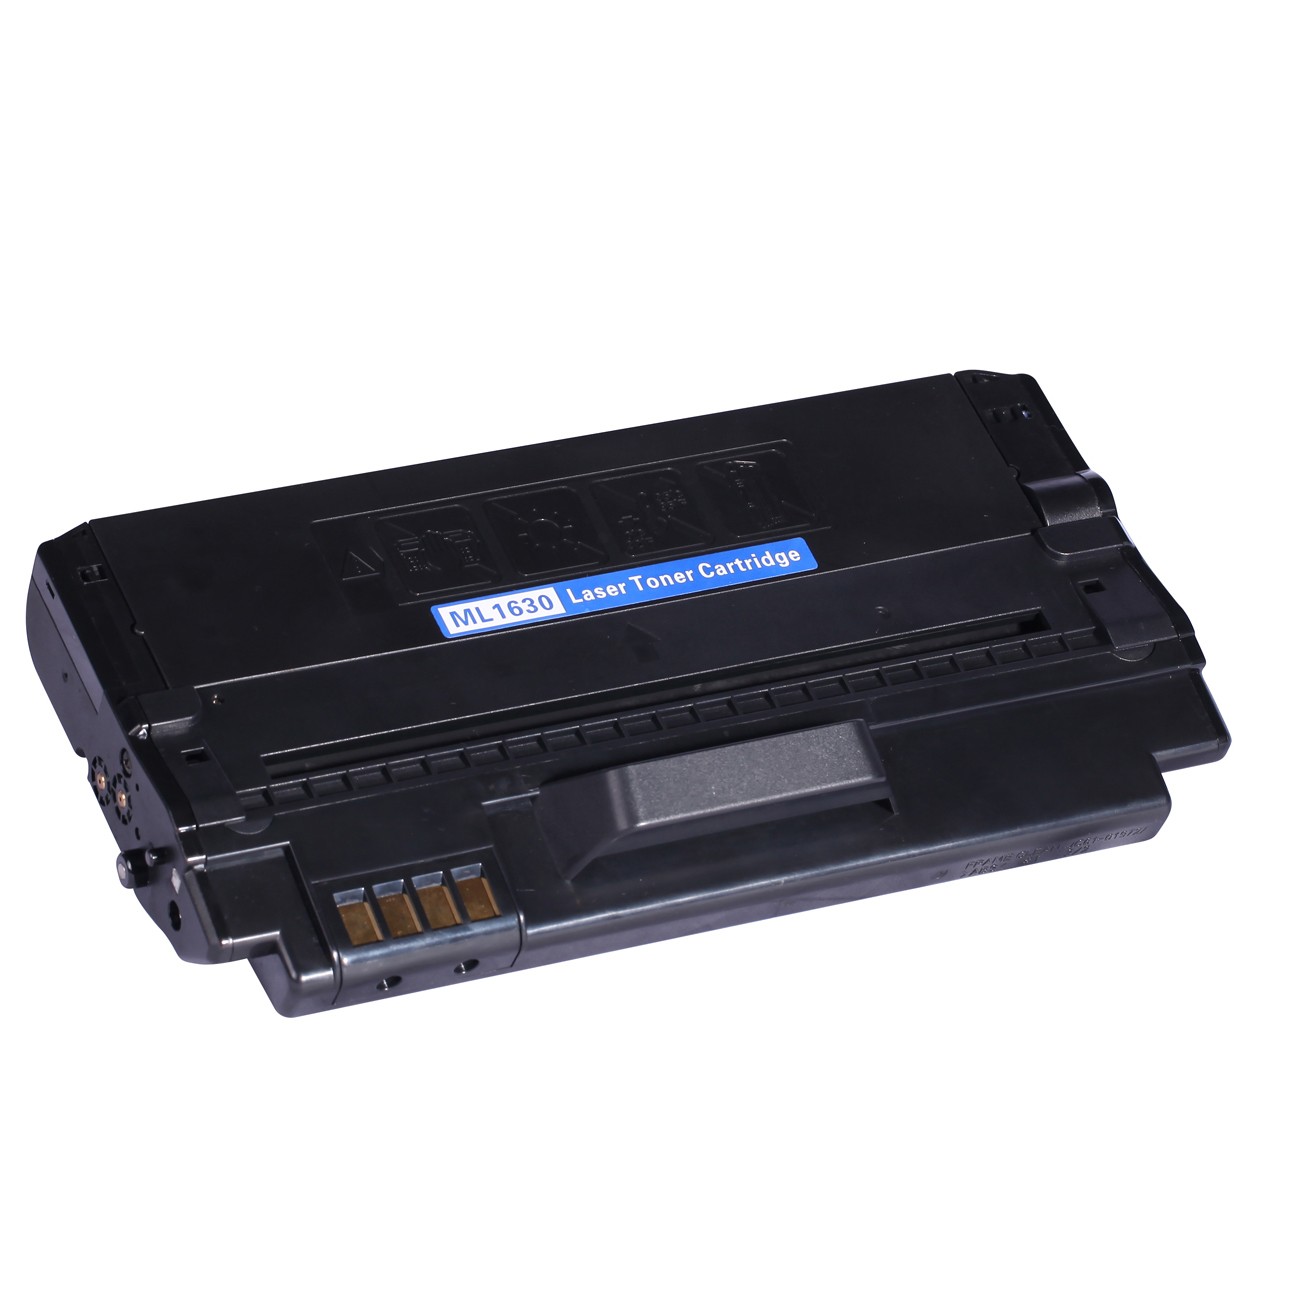 Compatible toner cartridge for Samsung ML1630